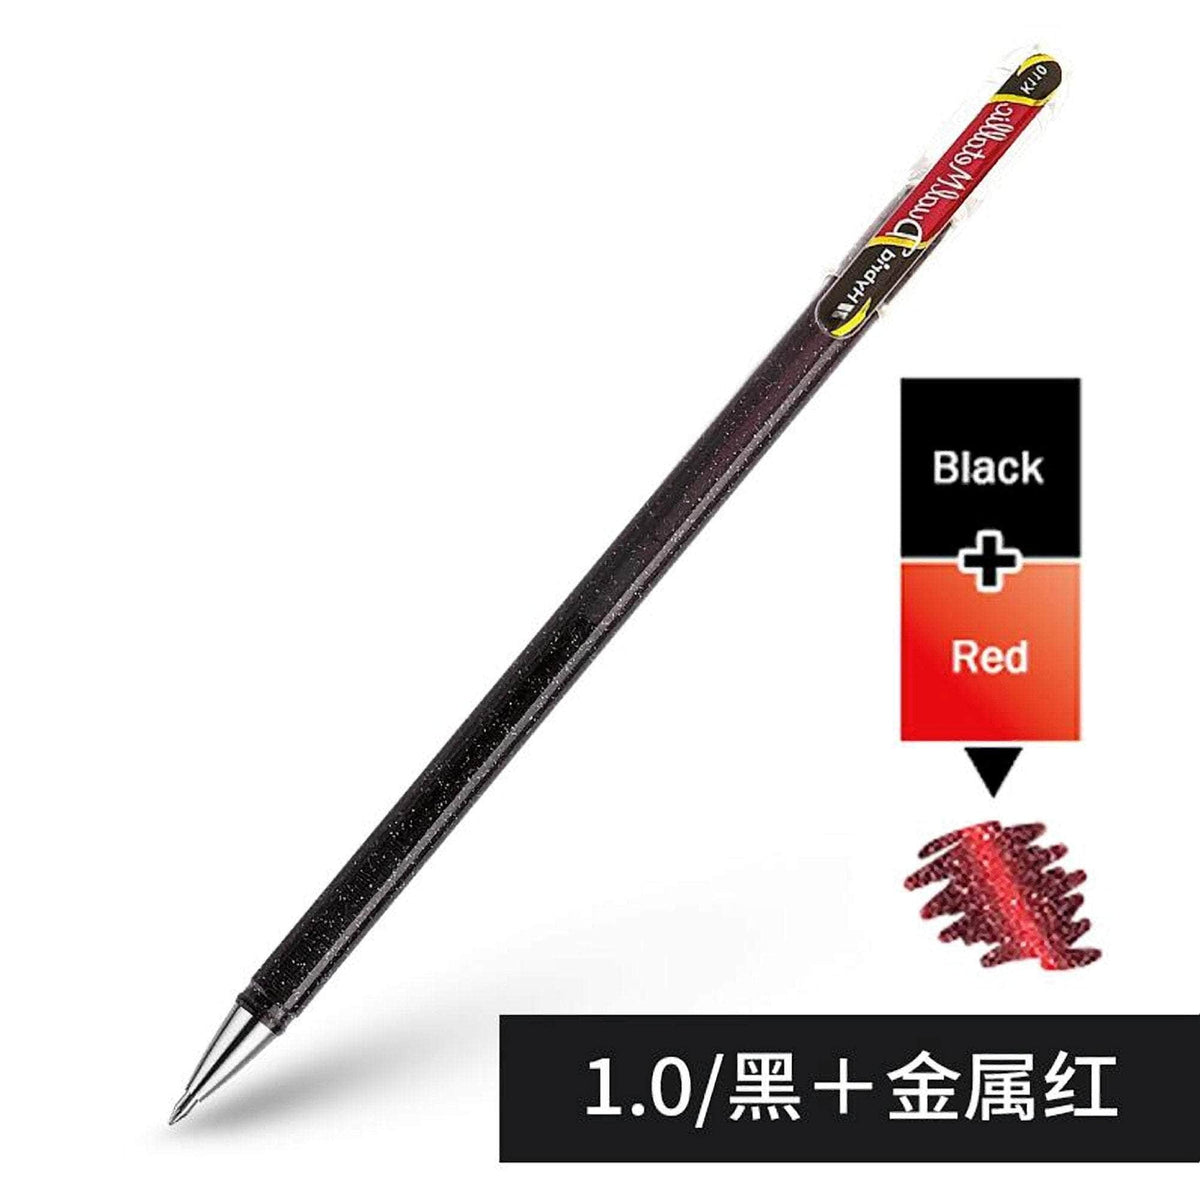 Pentel Hybrid Dual Gel Pen - Metallic Red & Black